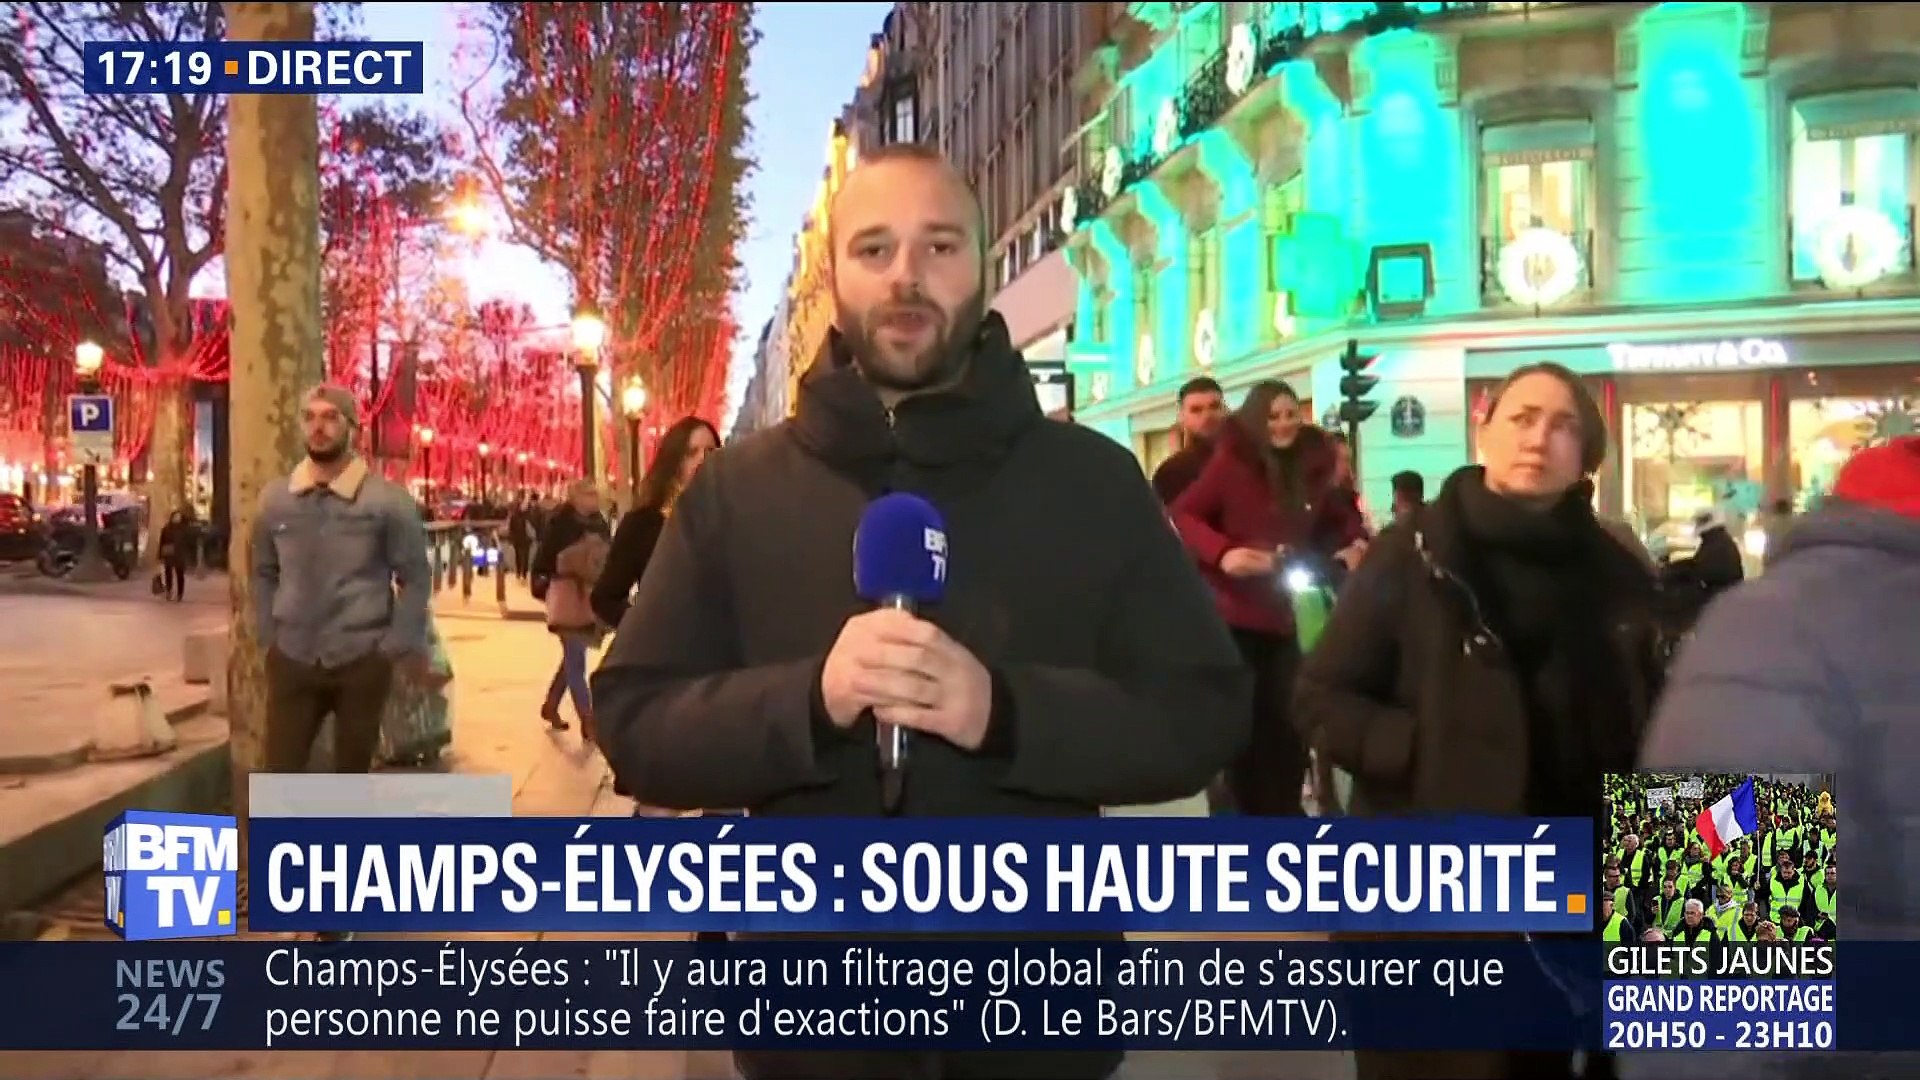 Gilets jaunes acte 3: Les Champs-Élysées barricadés - Vidéo Dailymotion